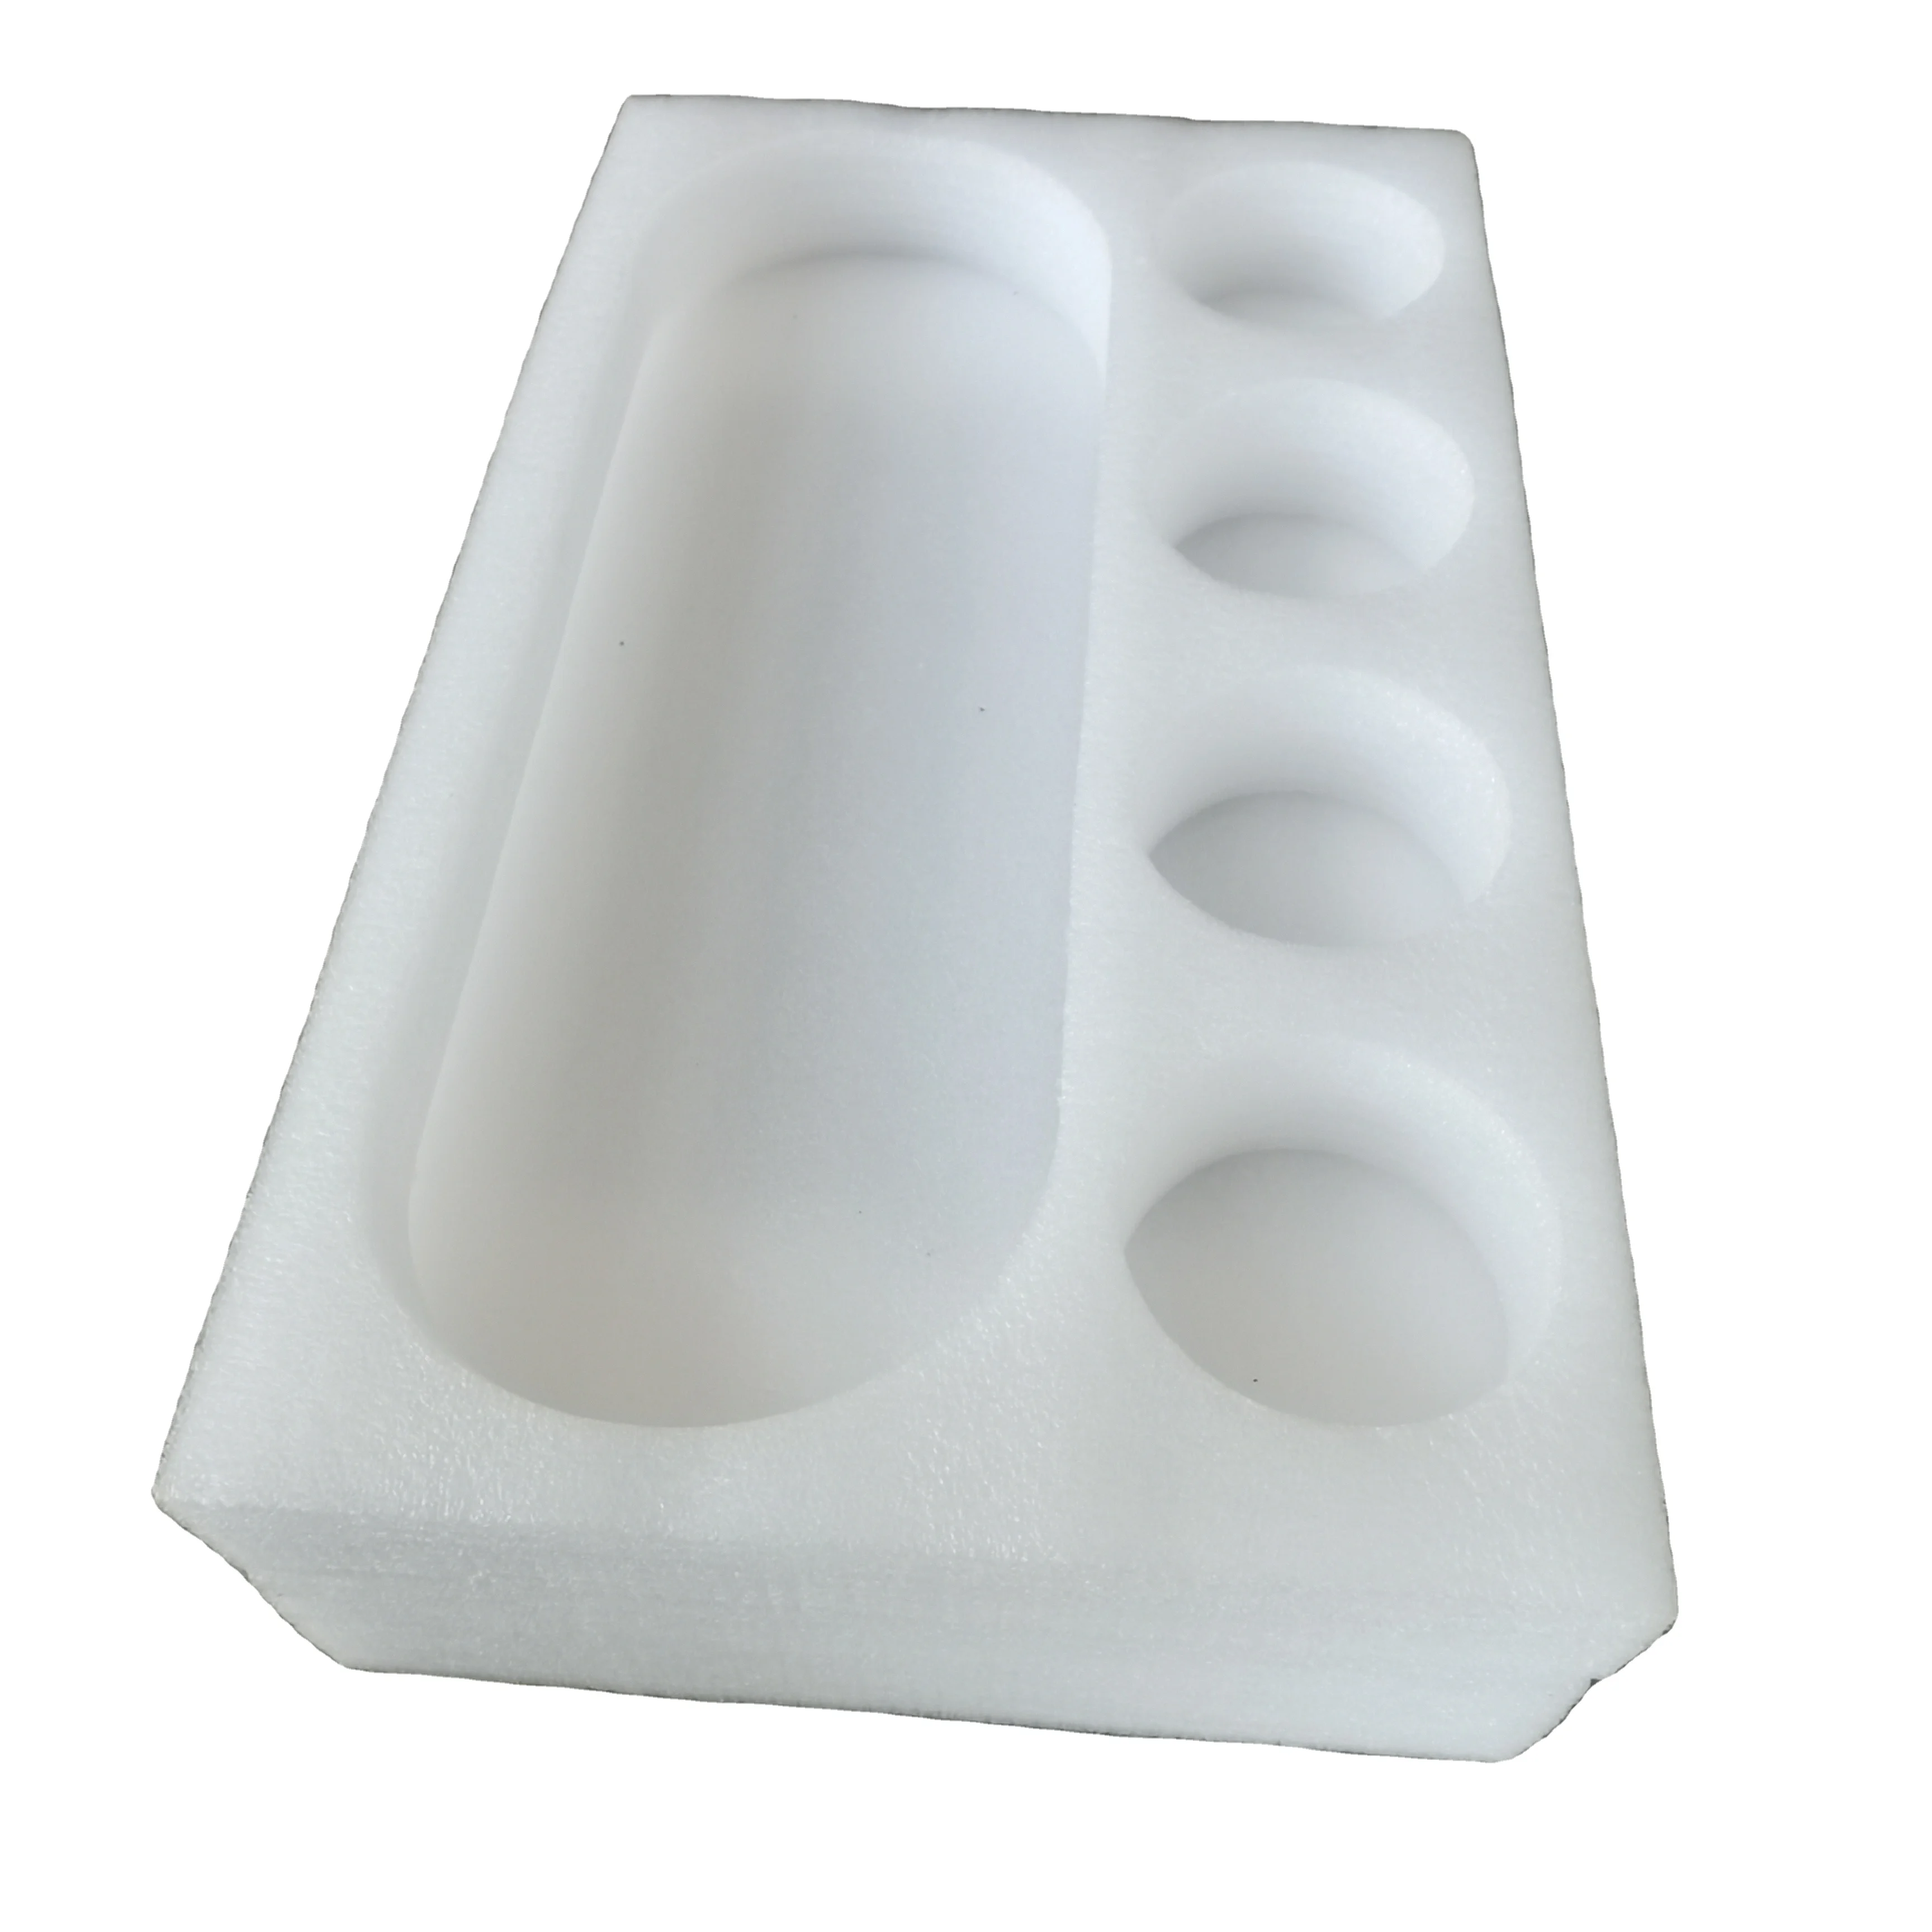 Oem Customized Foam Packaging Epe Custom Packaging Foam - Buy Oem  Customized Foam Packaging Epe Custom Packaging Foam Product on